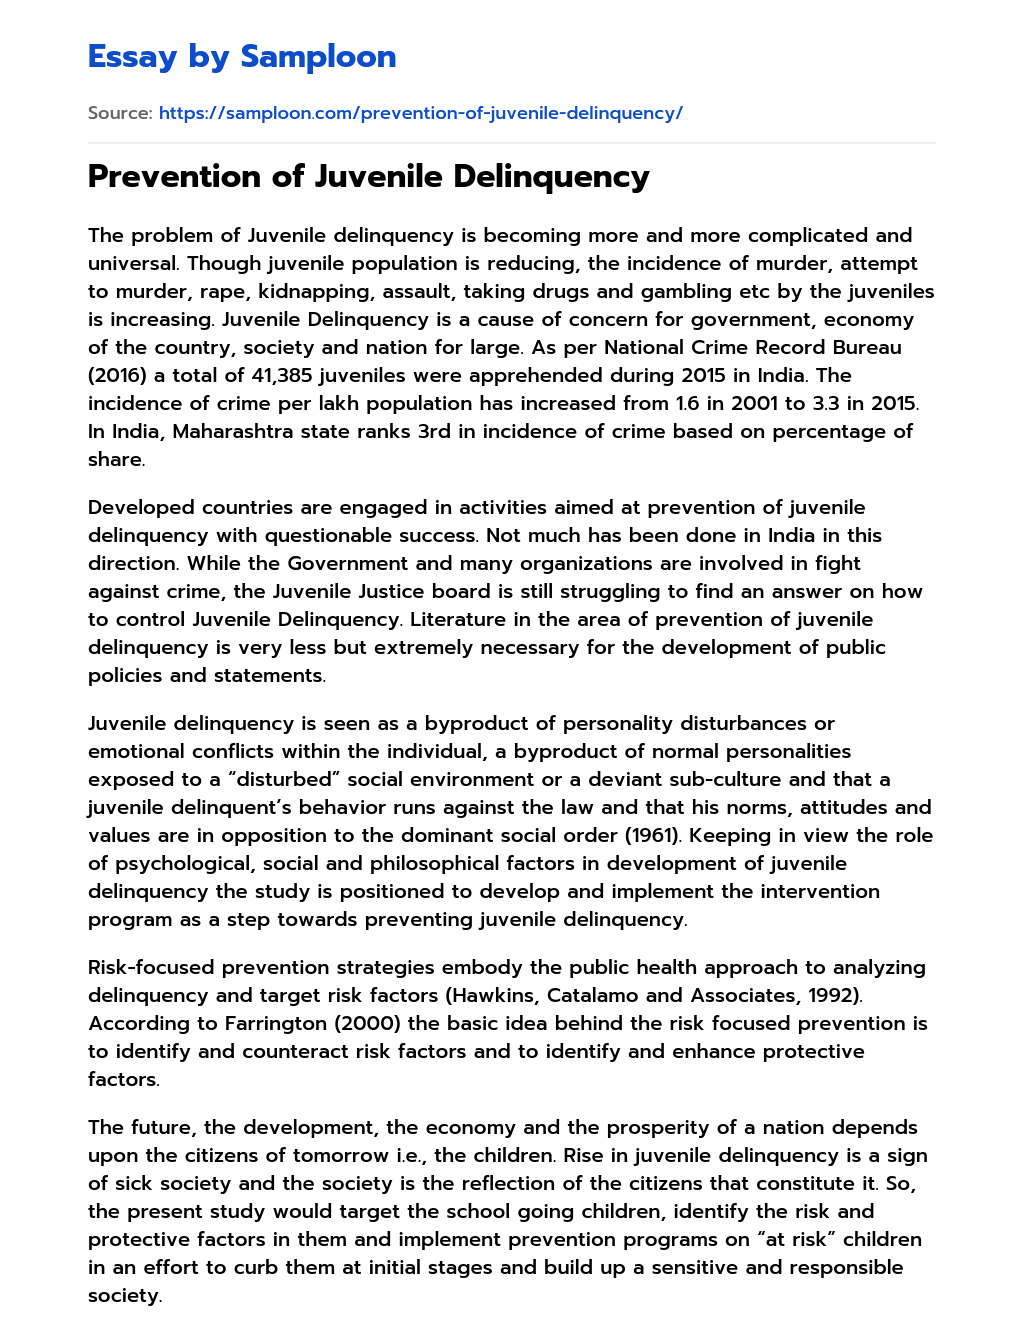 Prevention of Juvenile Delinquency essay